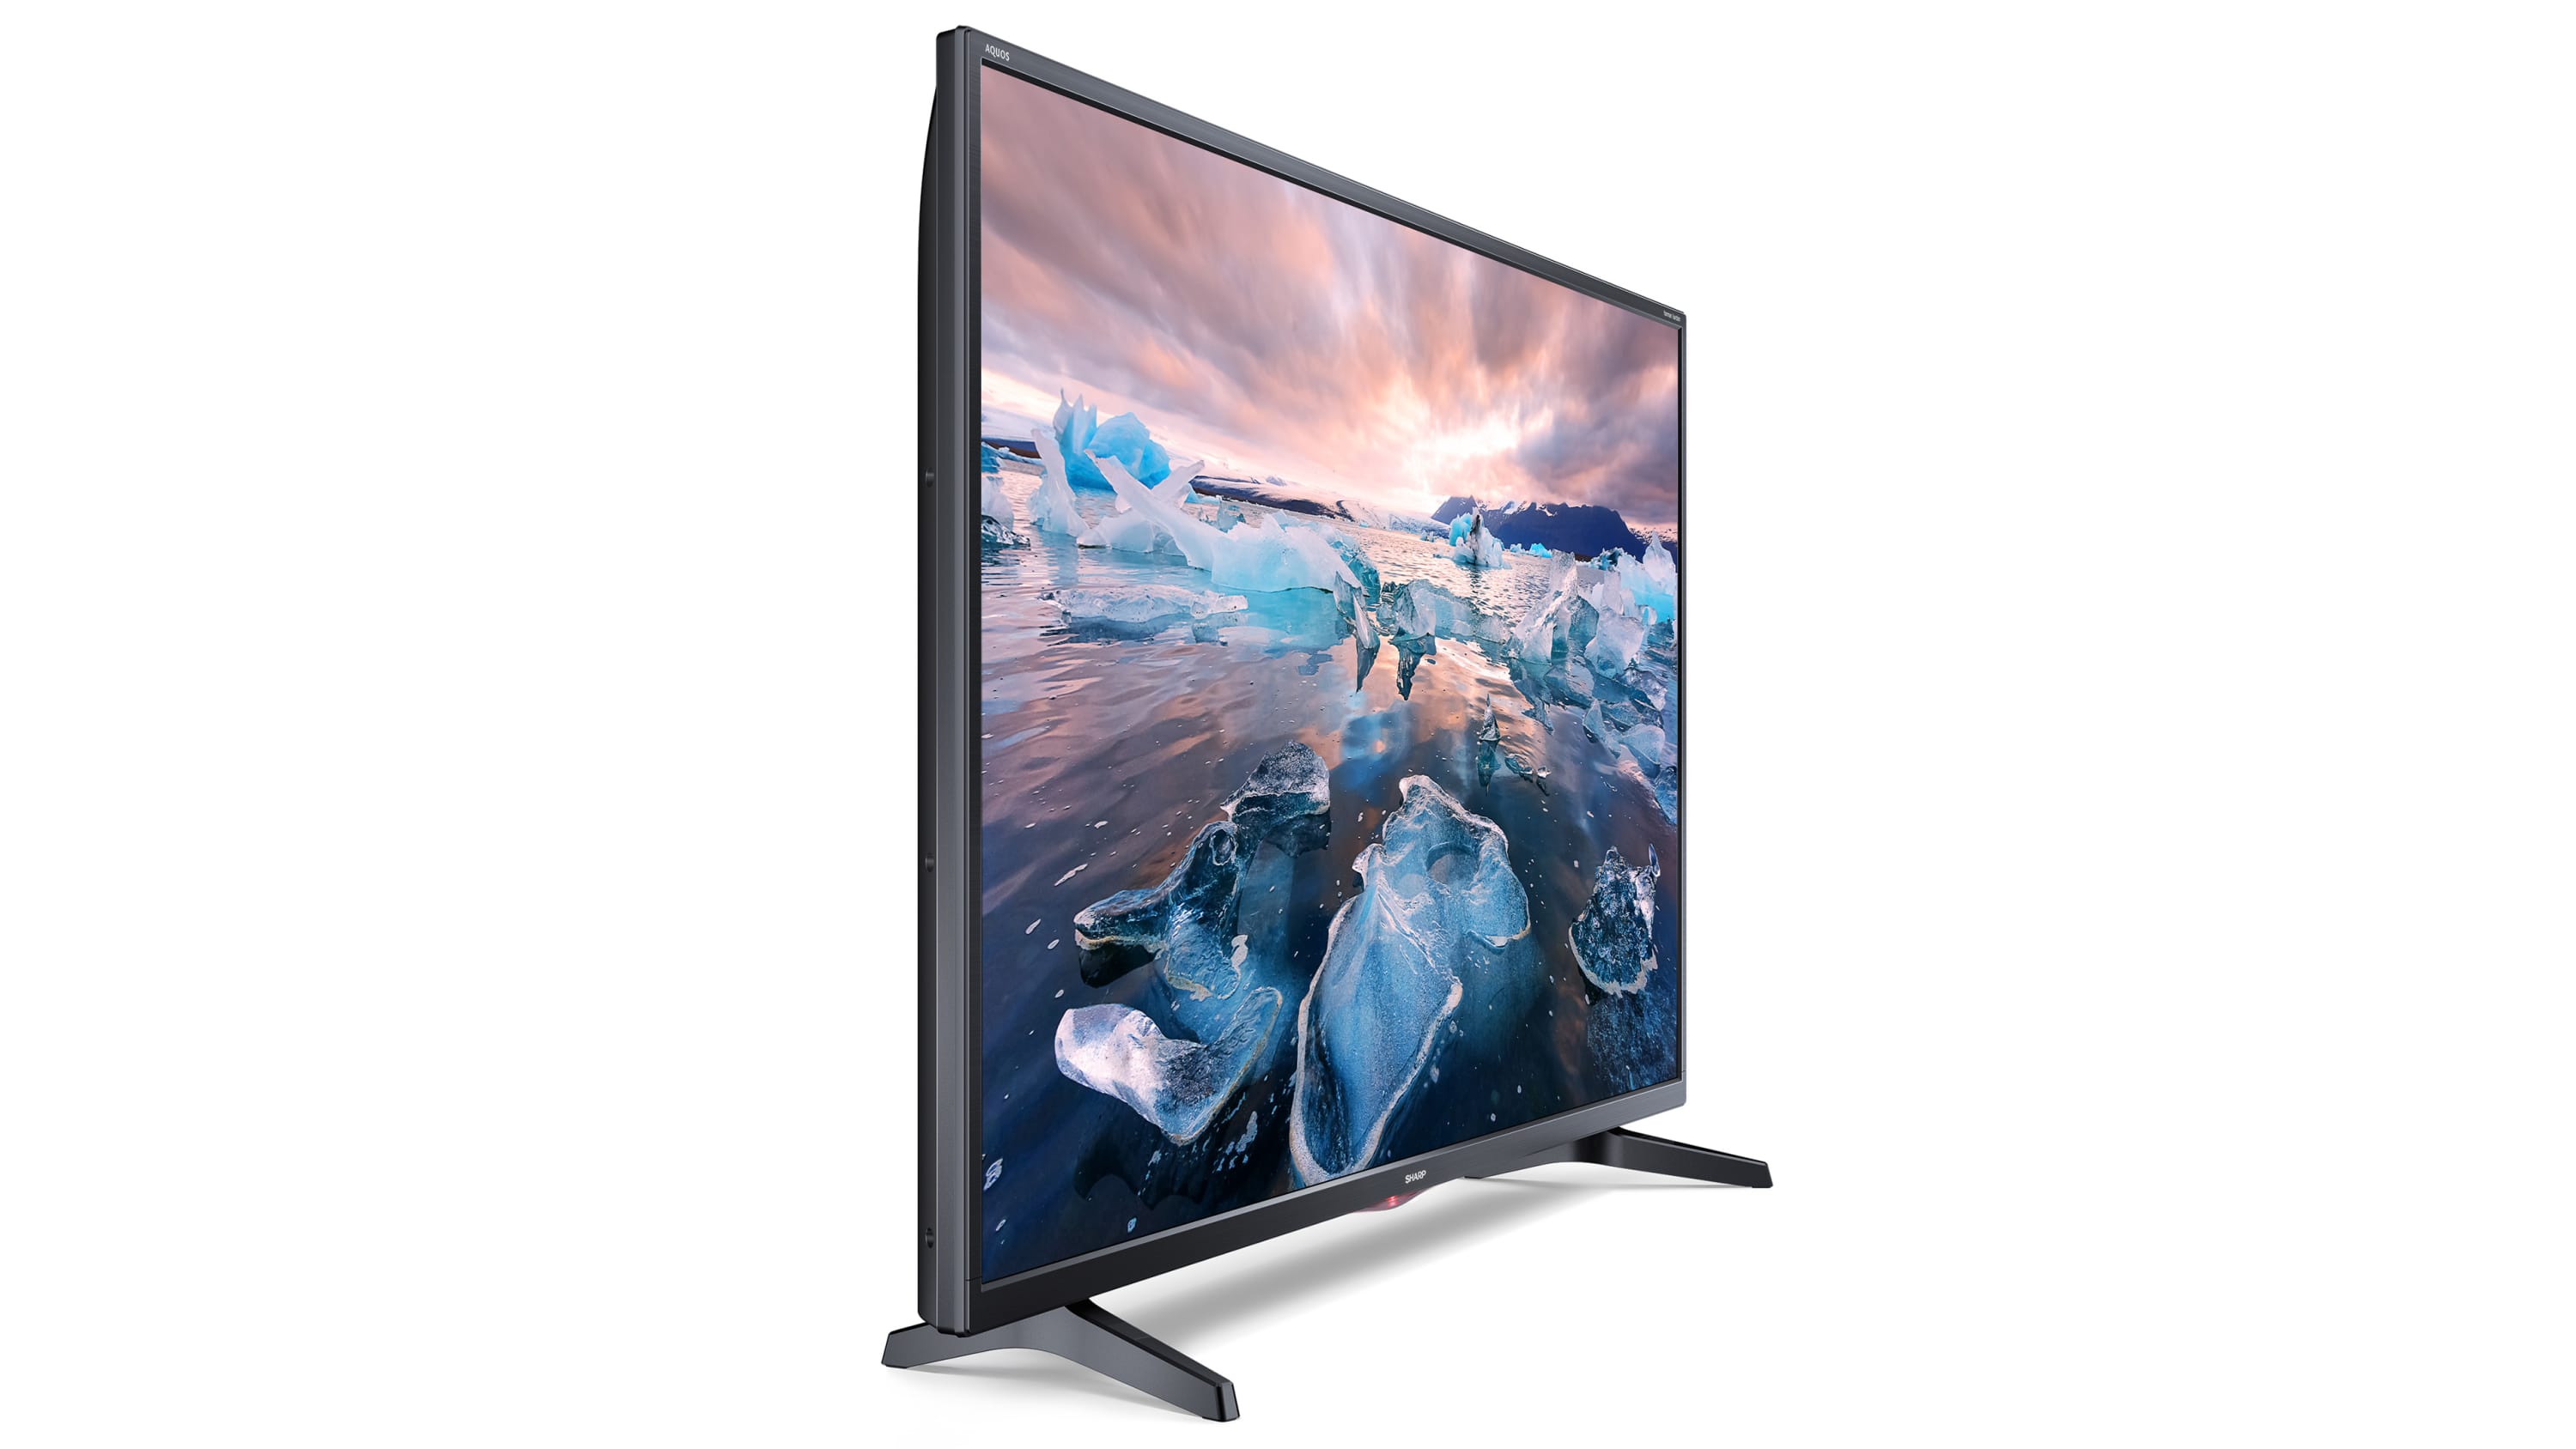 Smart-TV, HD/Full HD - 40" FULL HD SMART